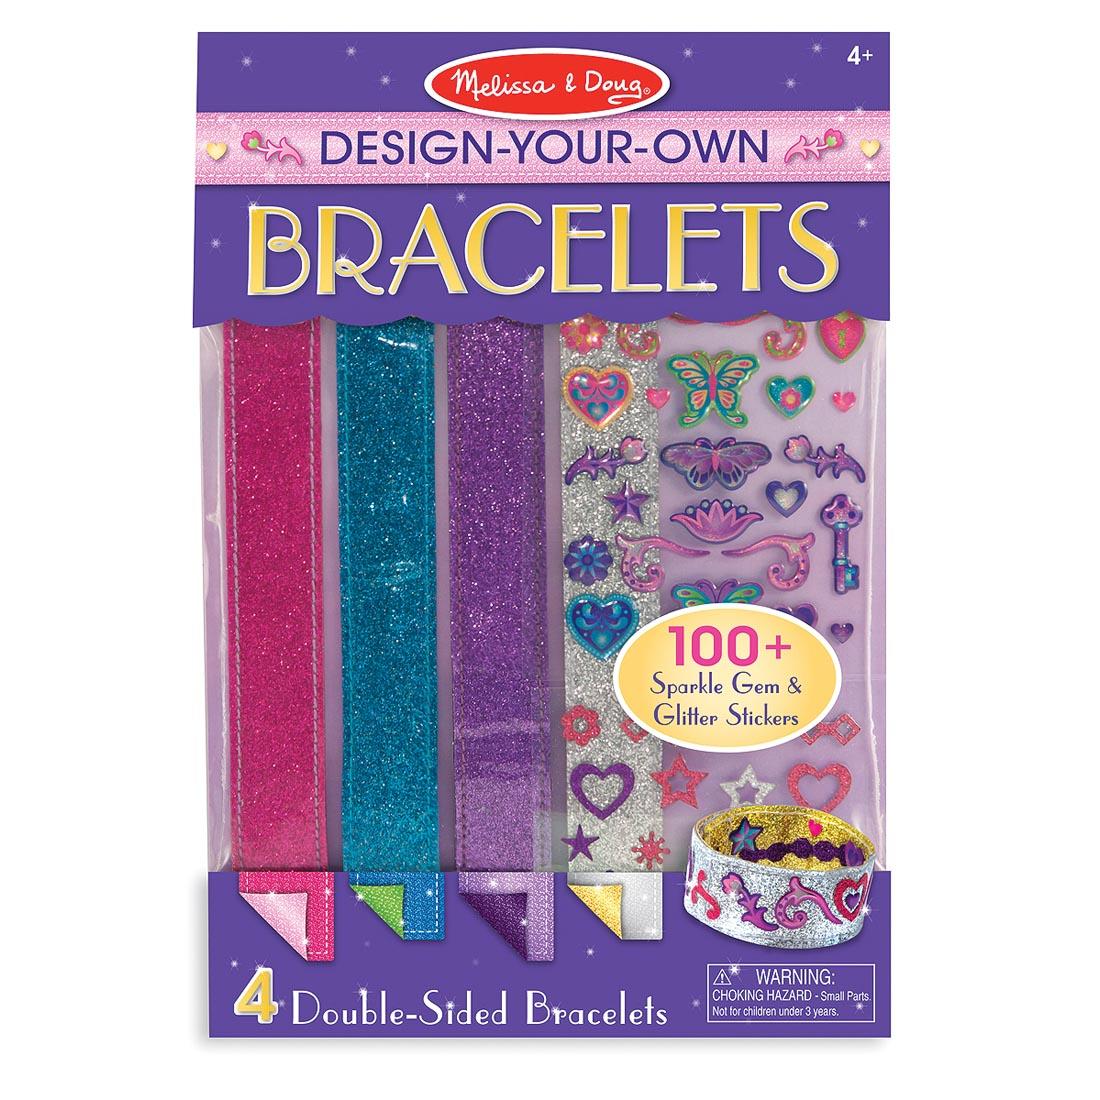 Design-Your-Own Bracelets Fashion Craft Set